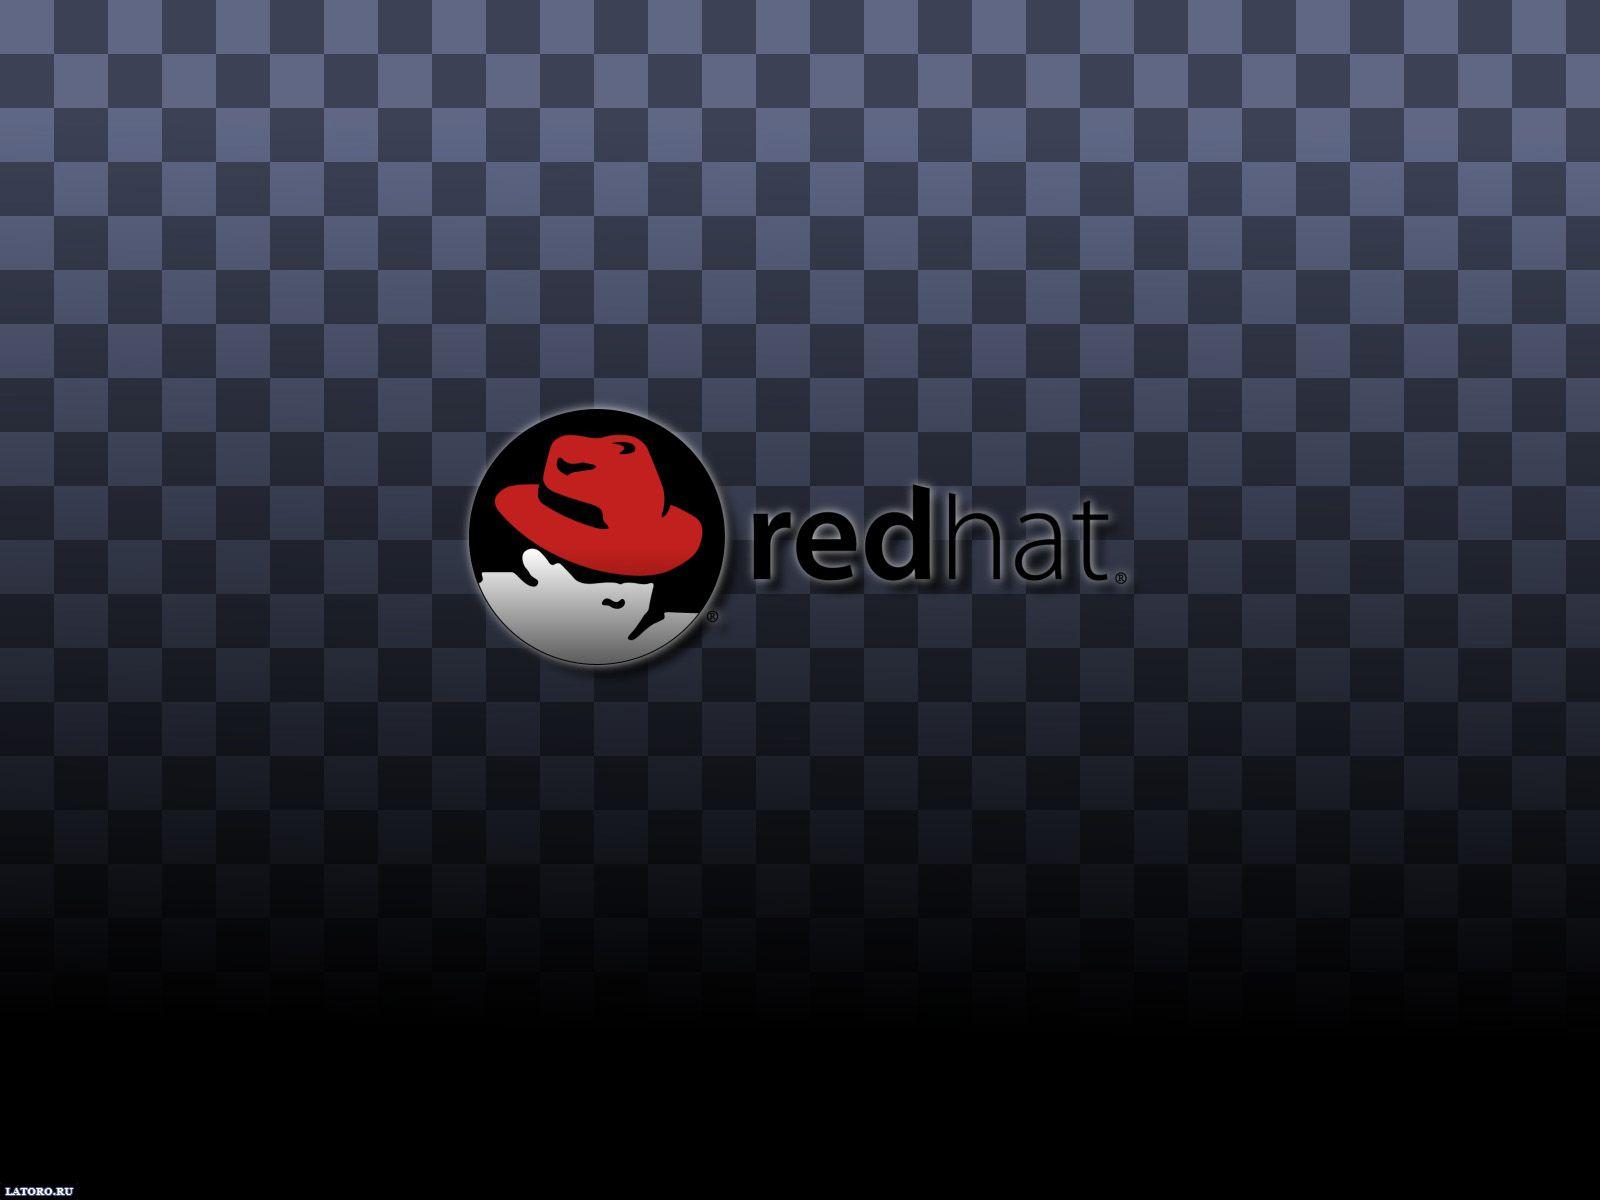 Red Hat Linux Desktop Wallpaper FREE on Latoro.com